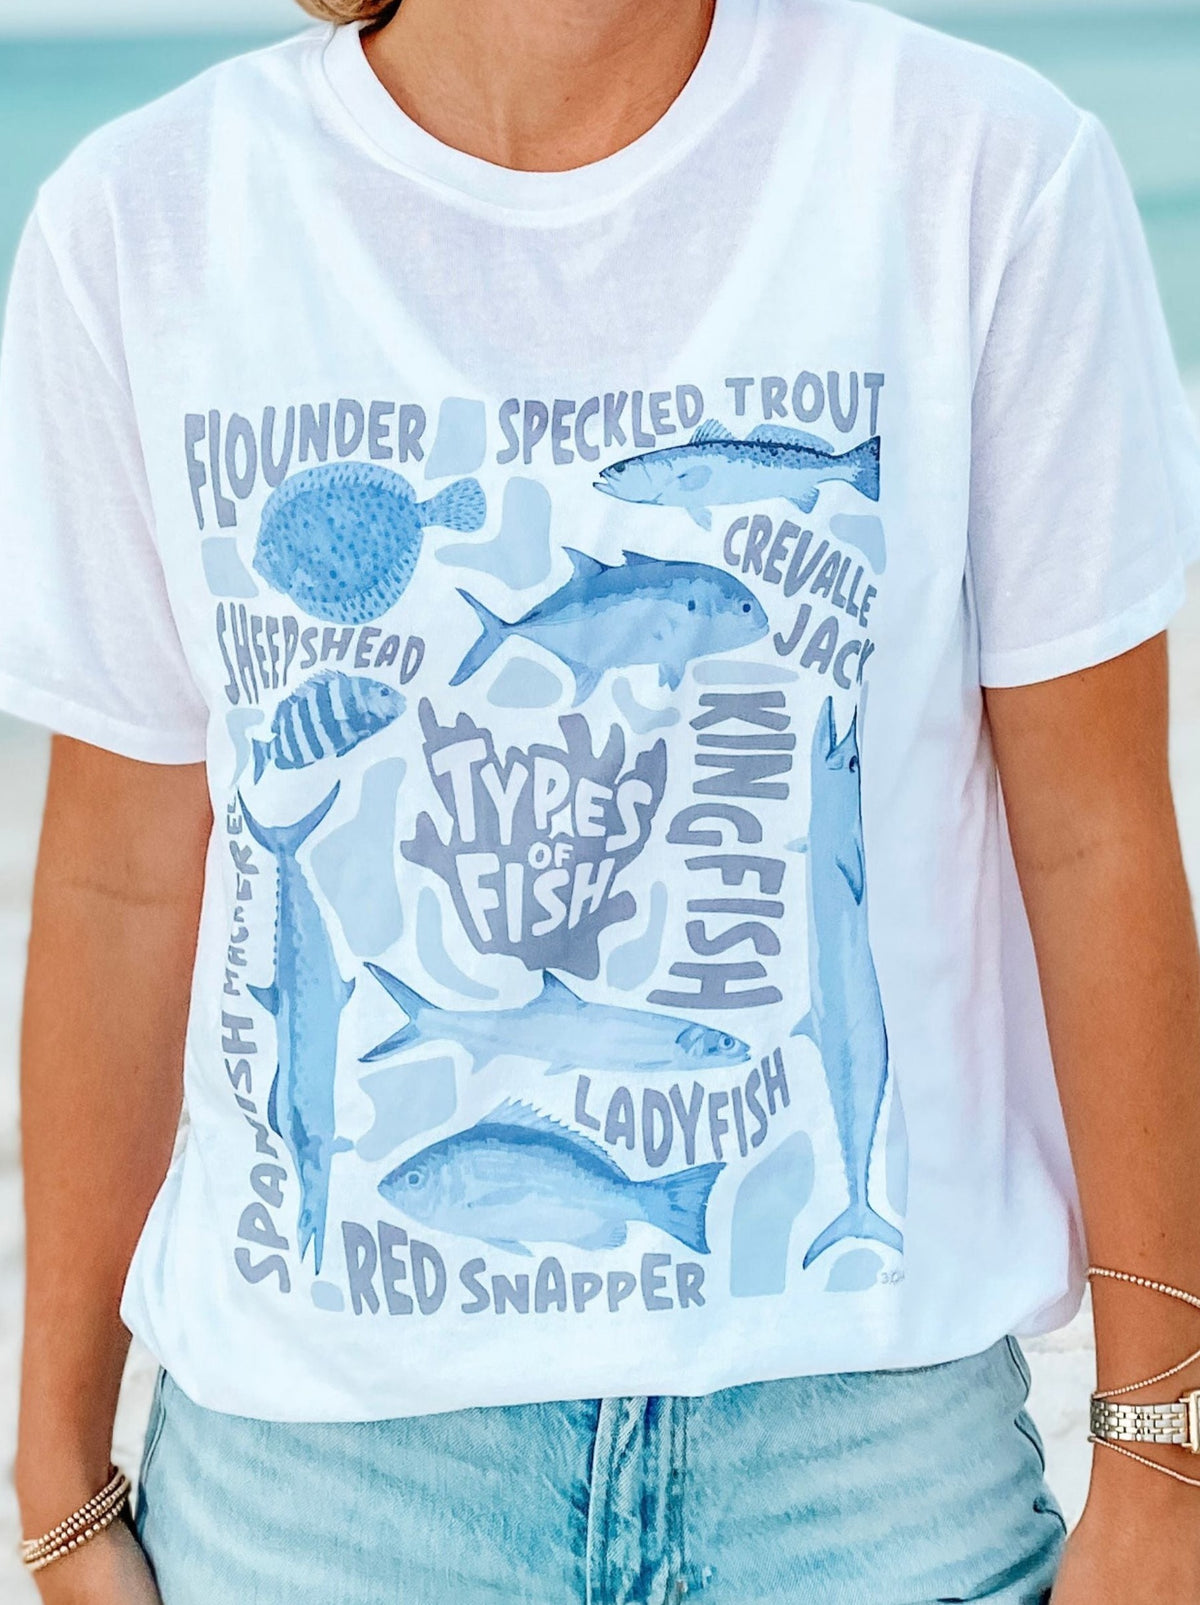 Types Of Fish T-Shirt